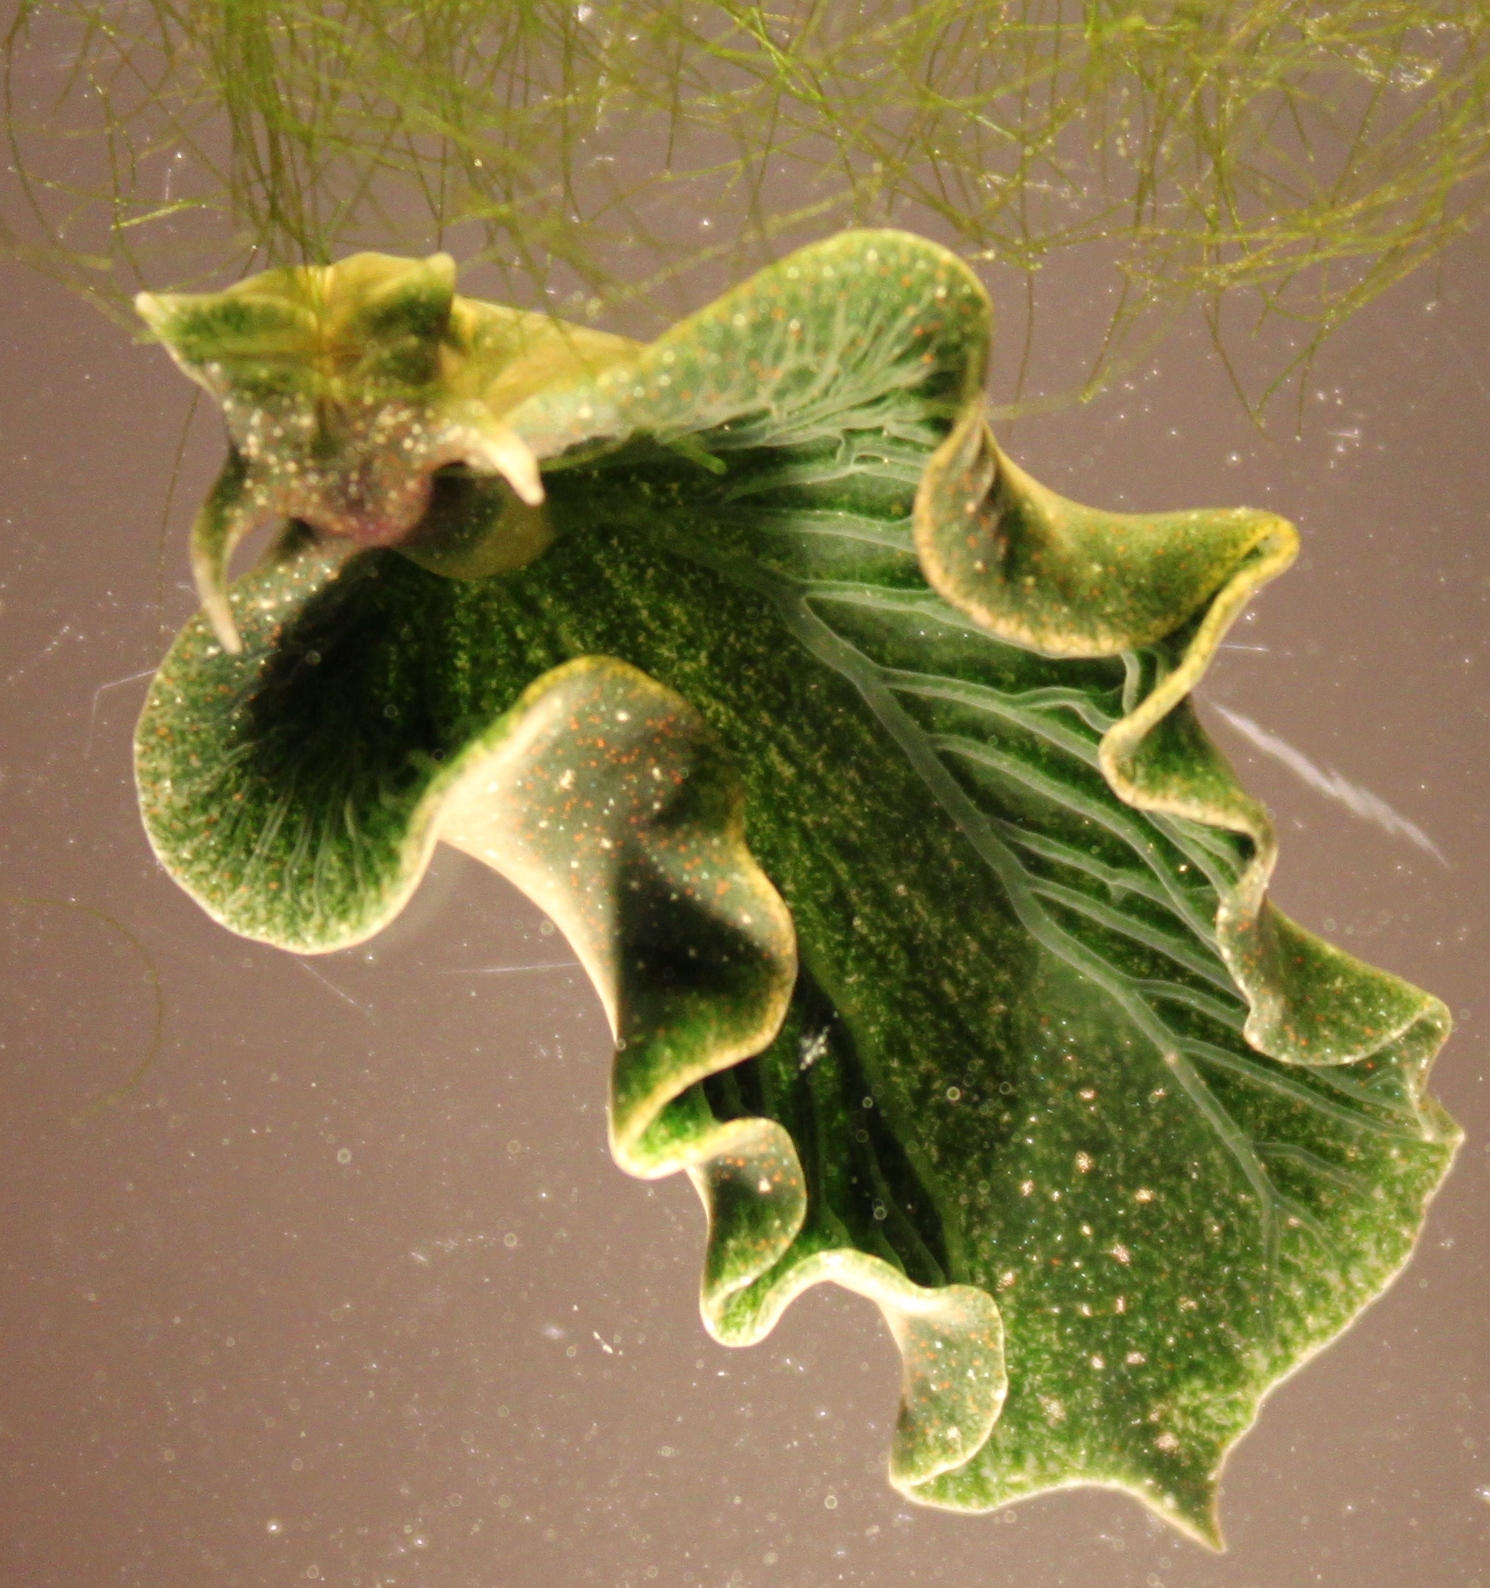 The sea slug, Elysia chlorotica, steals millions of green-colored plastids, which are like tiny solar panels, from algae. Photo: Karen N. Pelletreau/University of Maine